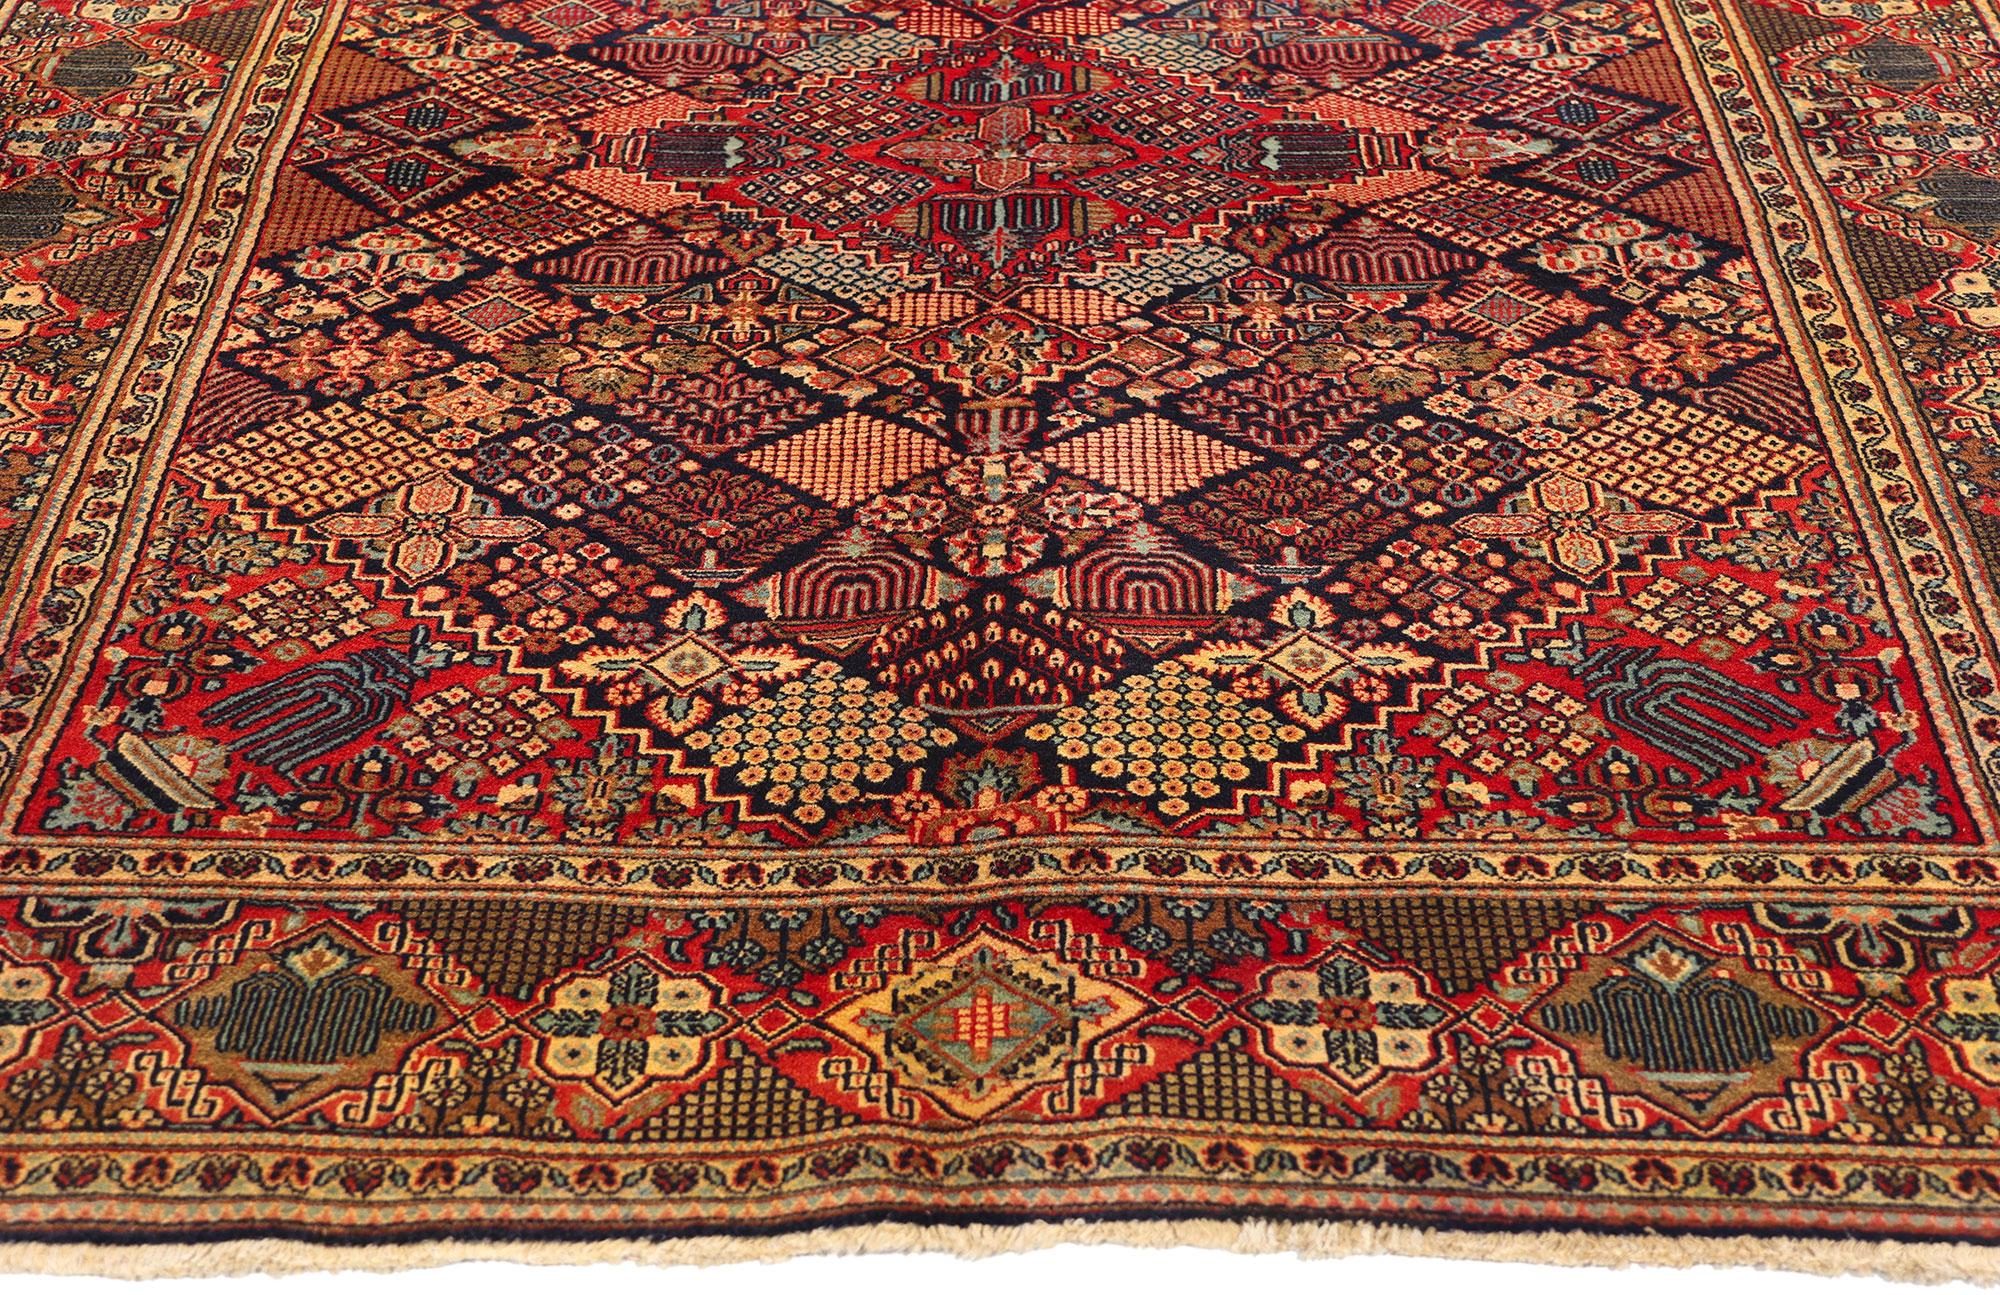 Antique Persian Kashan Rug with Joshegan Diamond Design and Jewel-Tone Colors For Sale 9